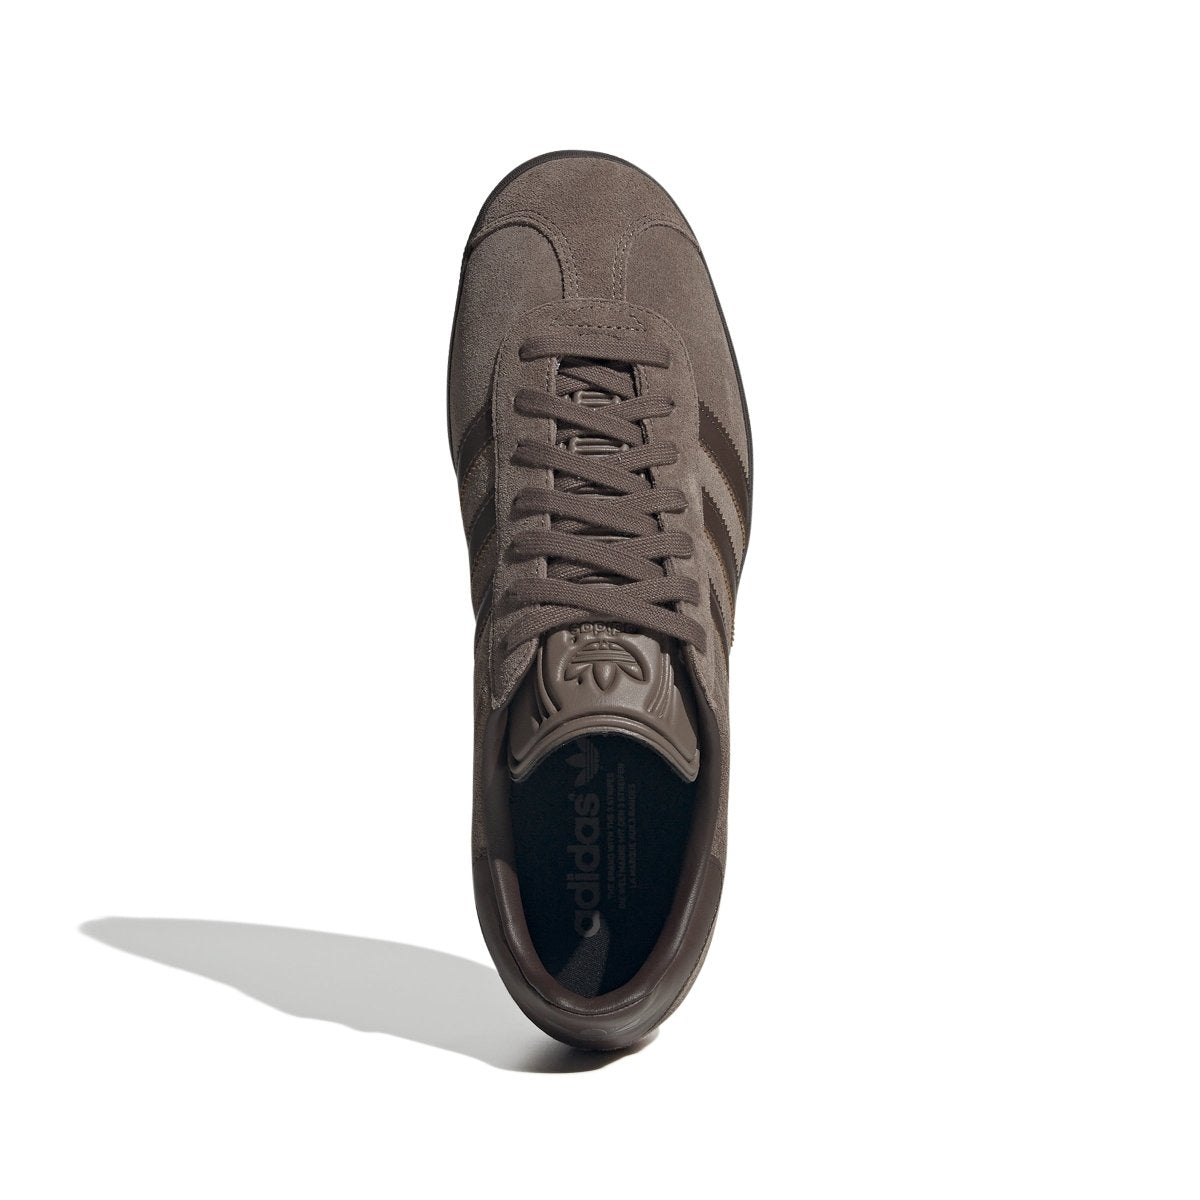 Adidas Gazelle EARSTR/BROWN - KYOTO - Adidas